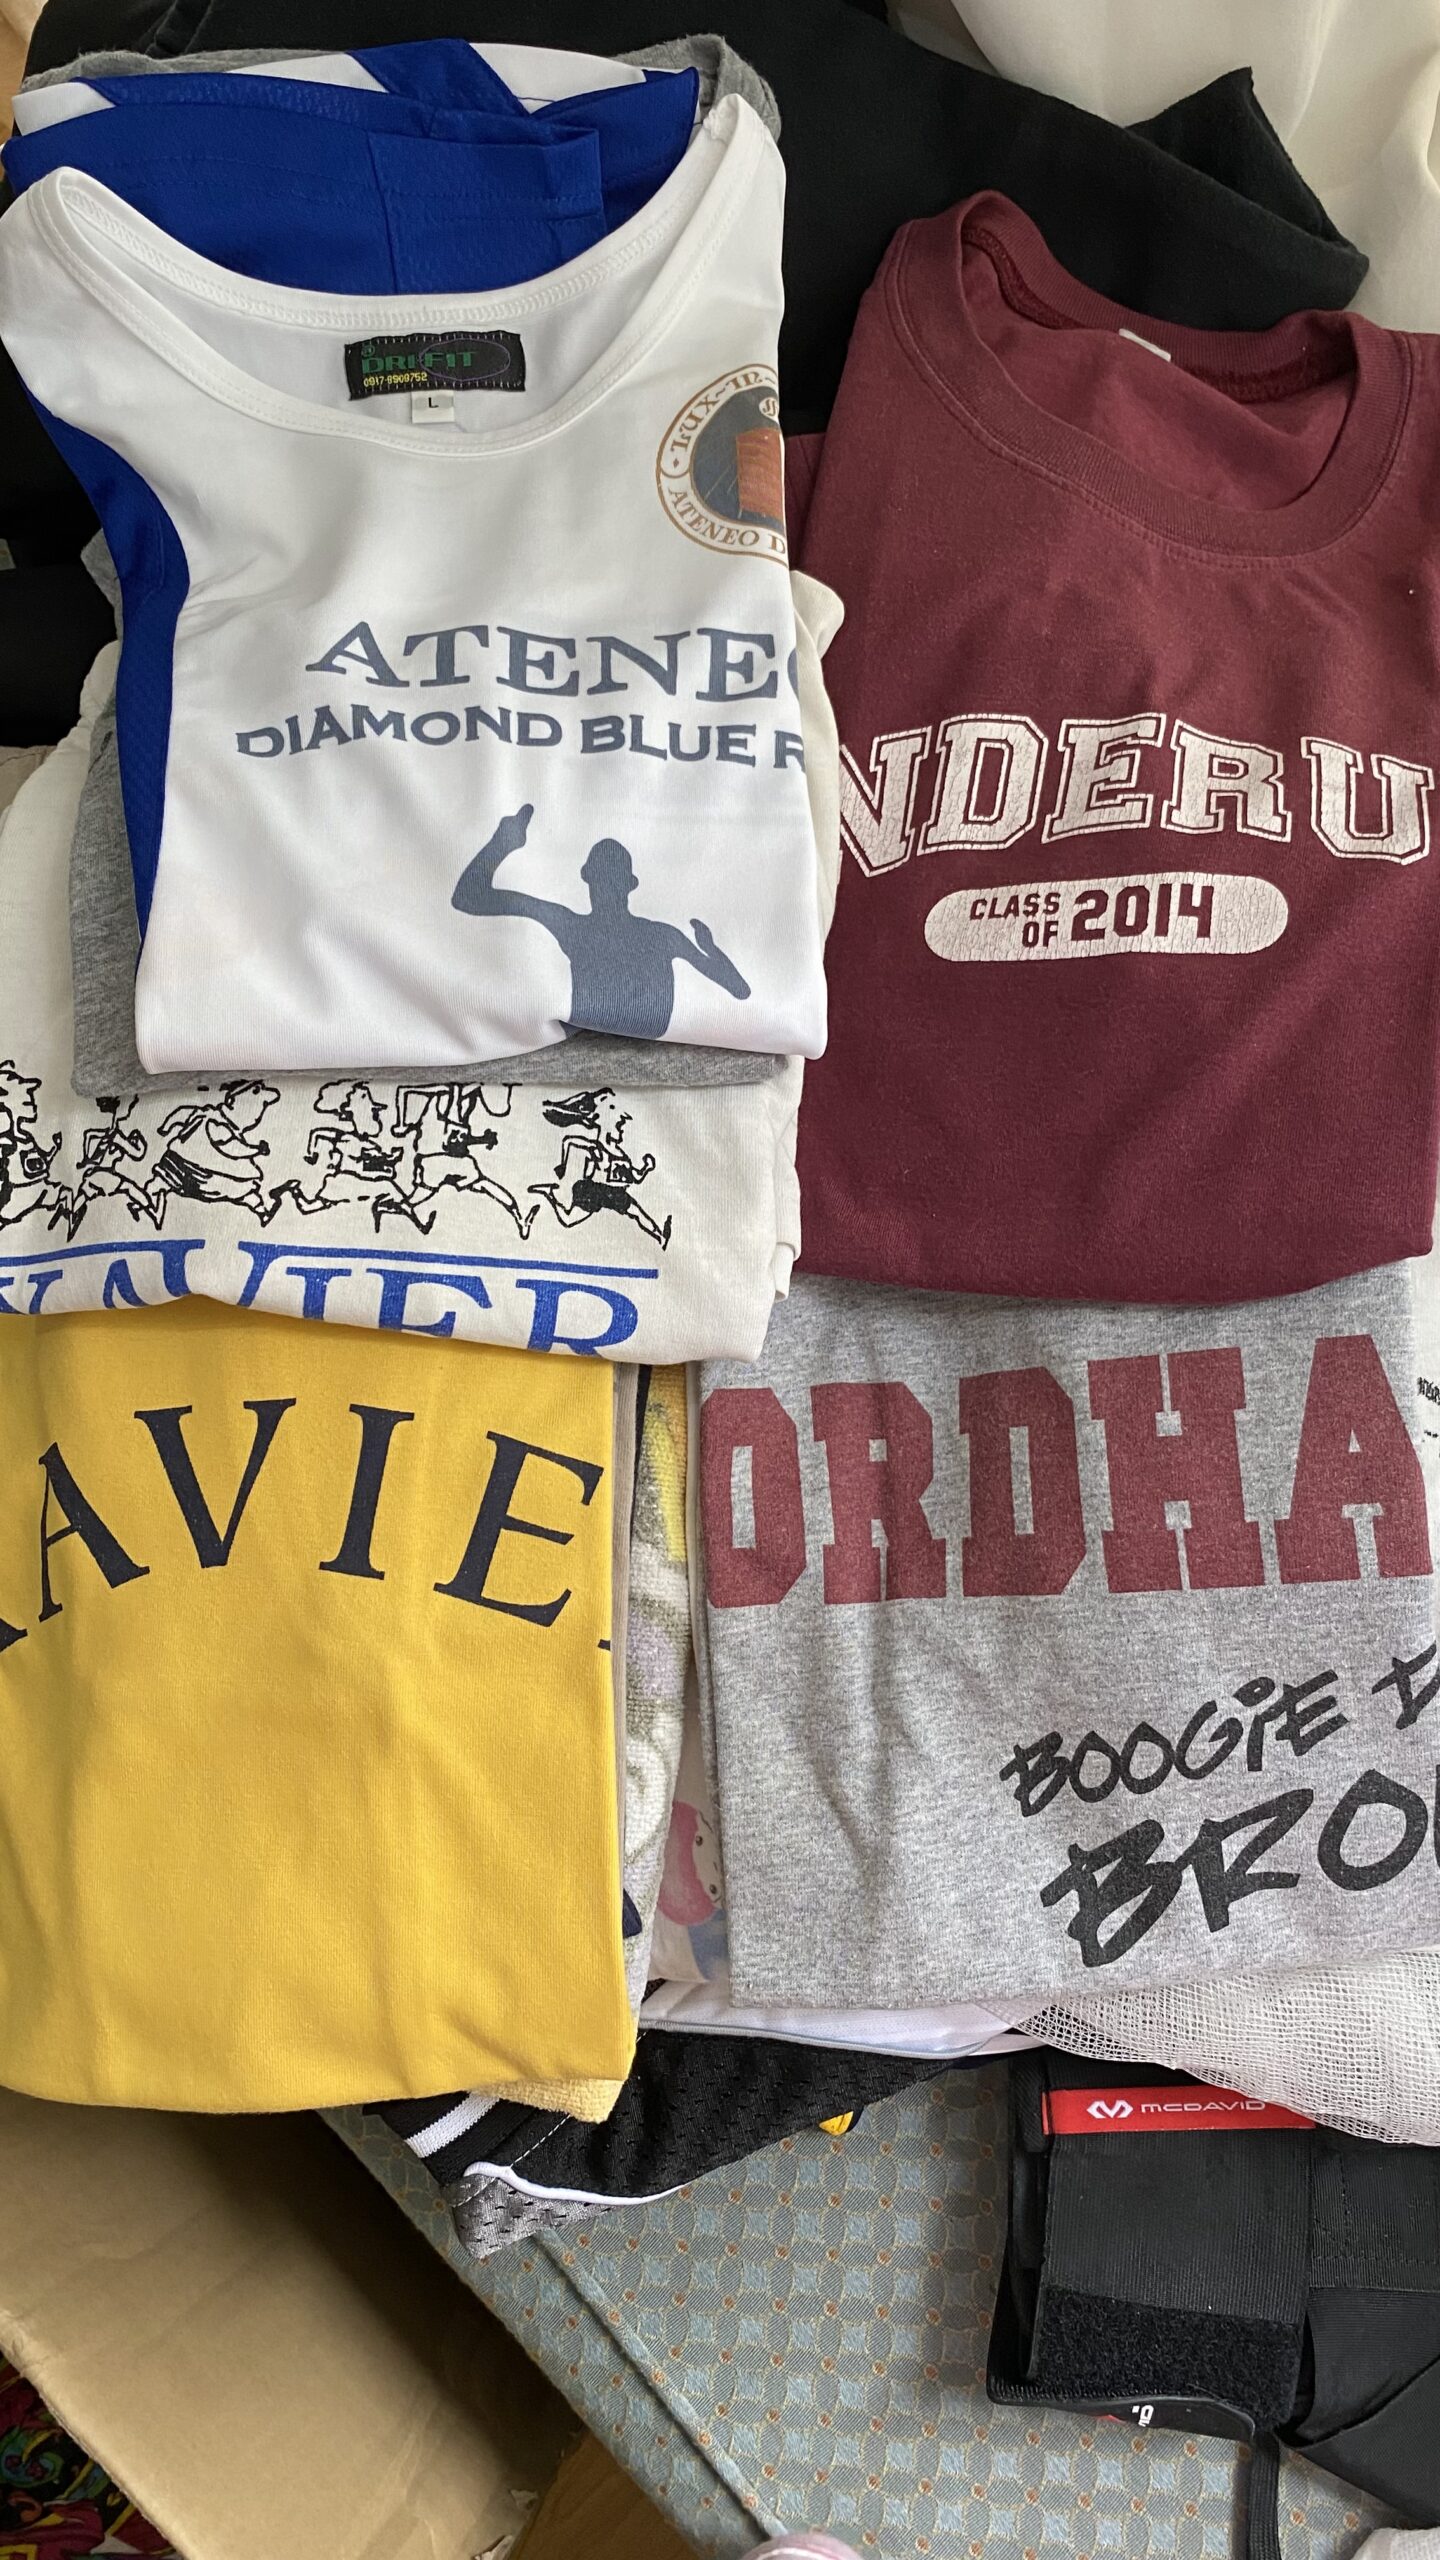 Xavier t-shirts